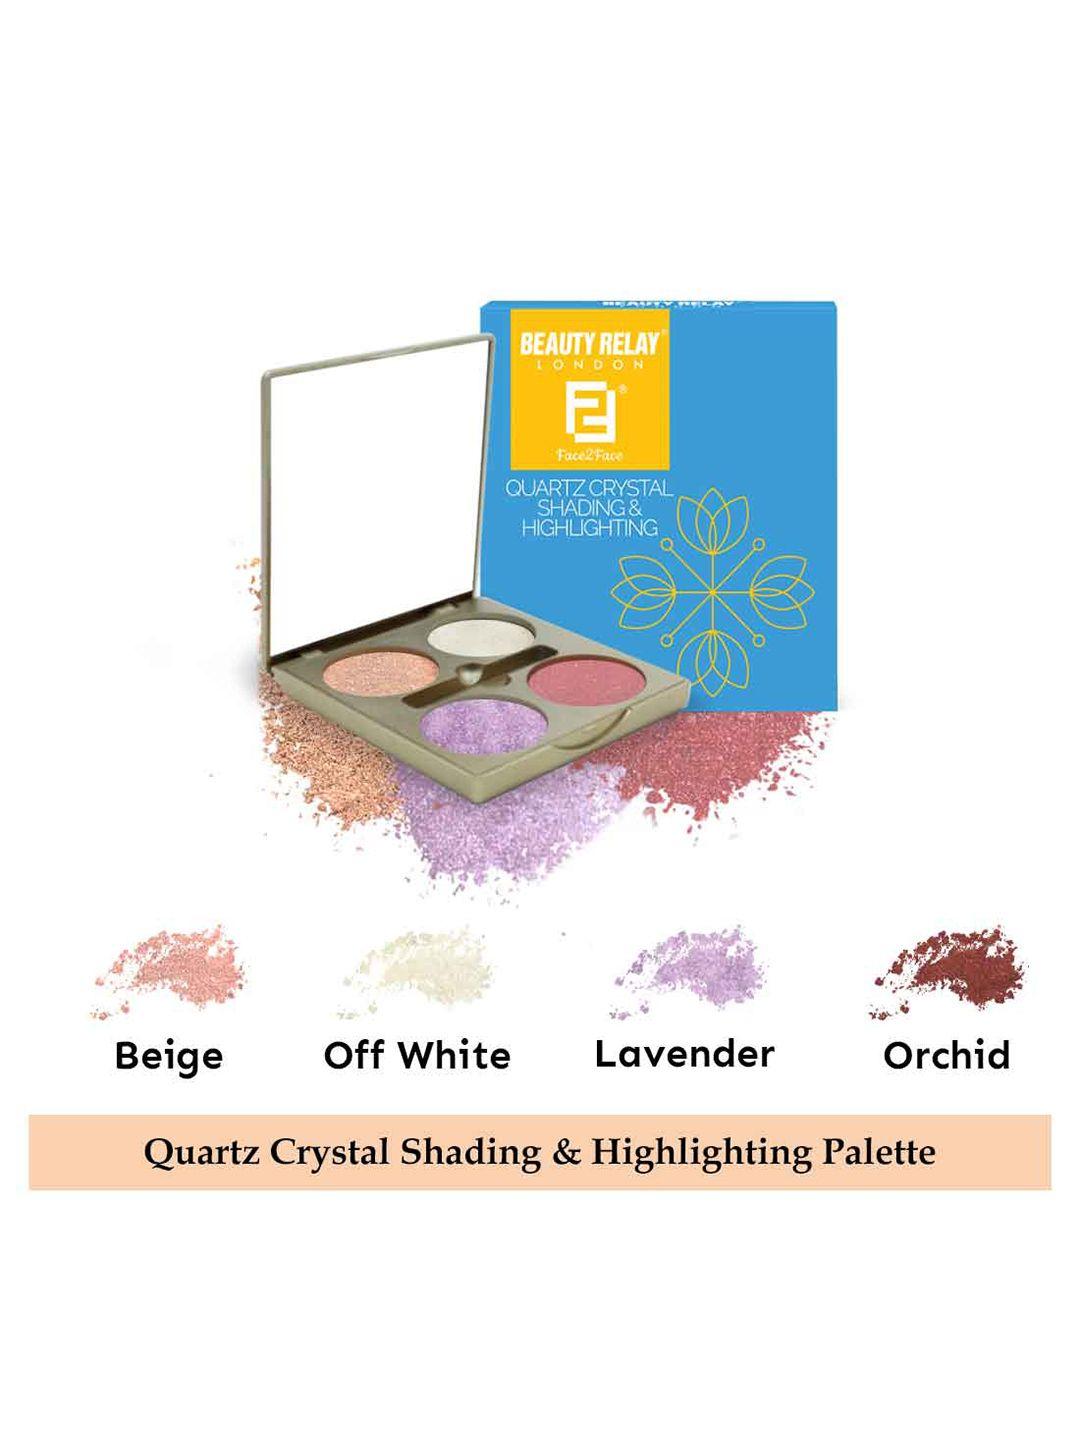 beautyrelay london face 2 face quartz crystal shading & highlighting palette